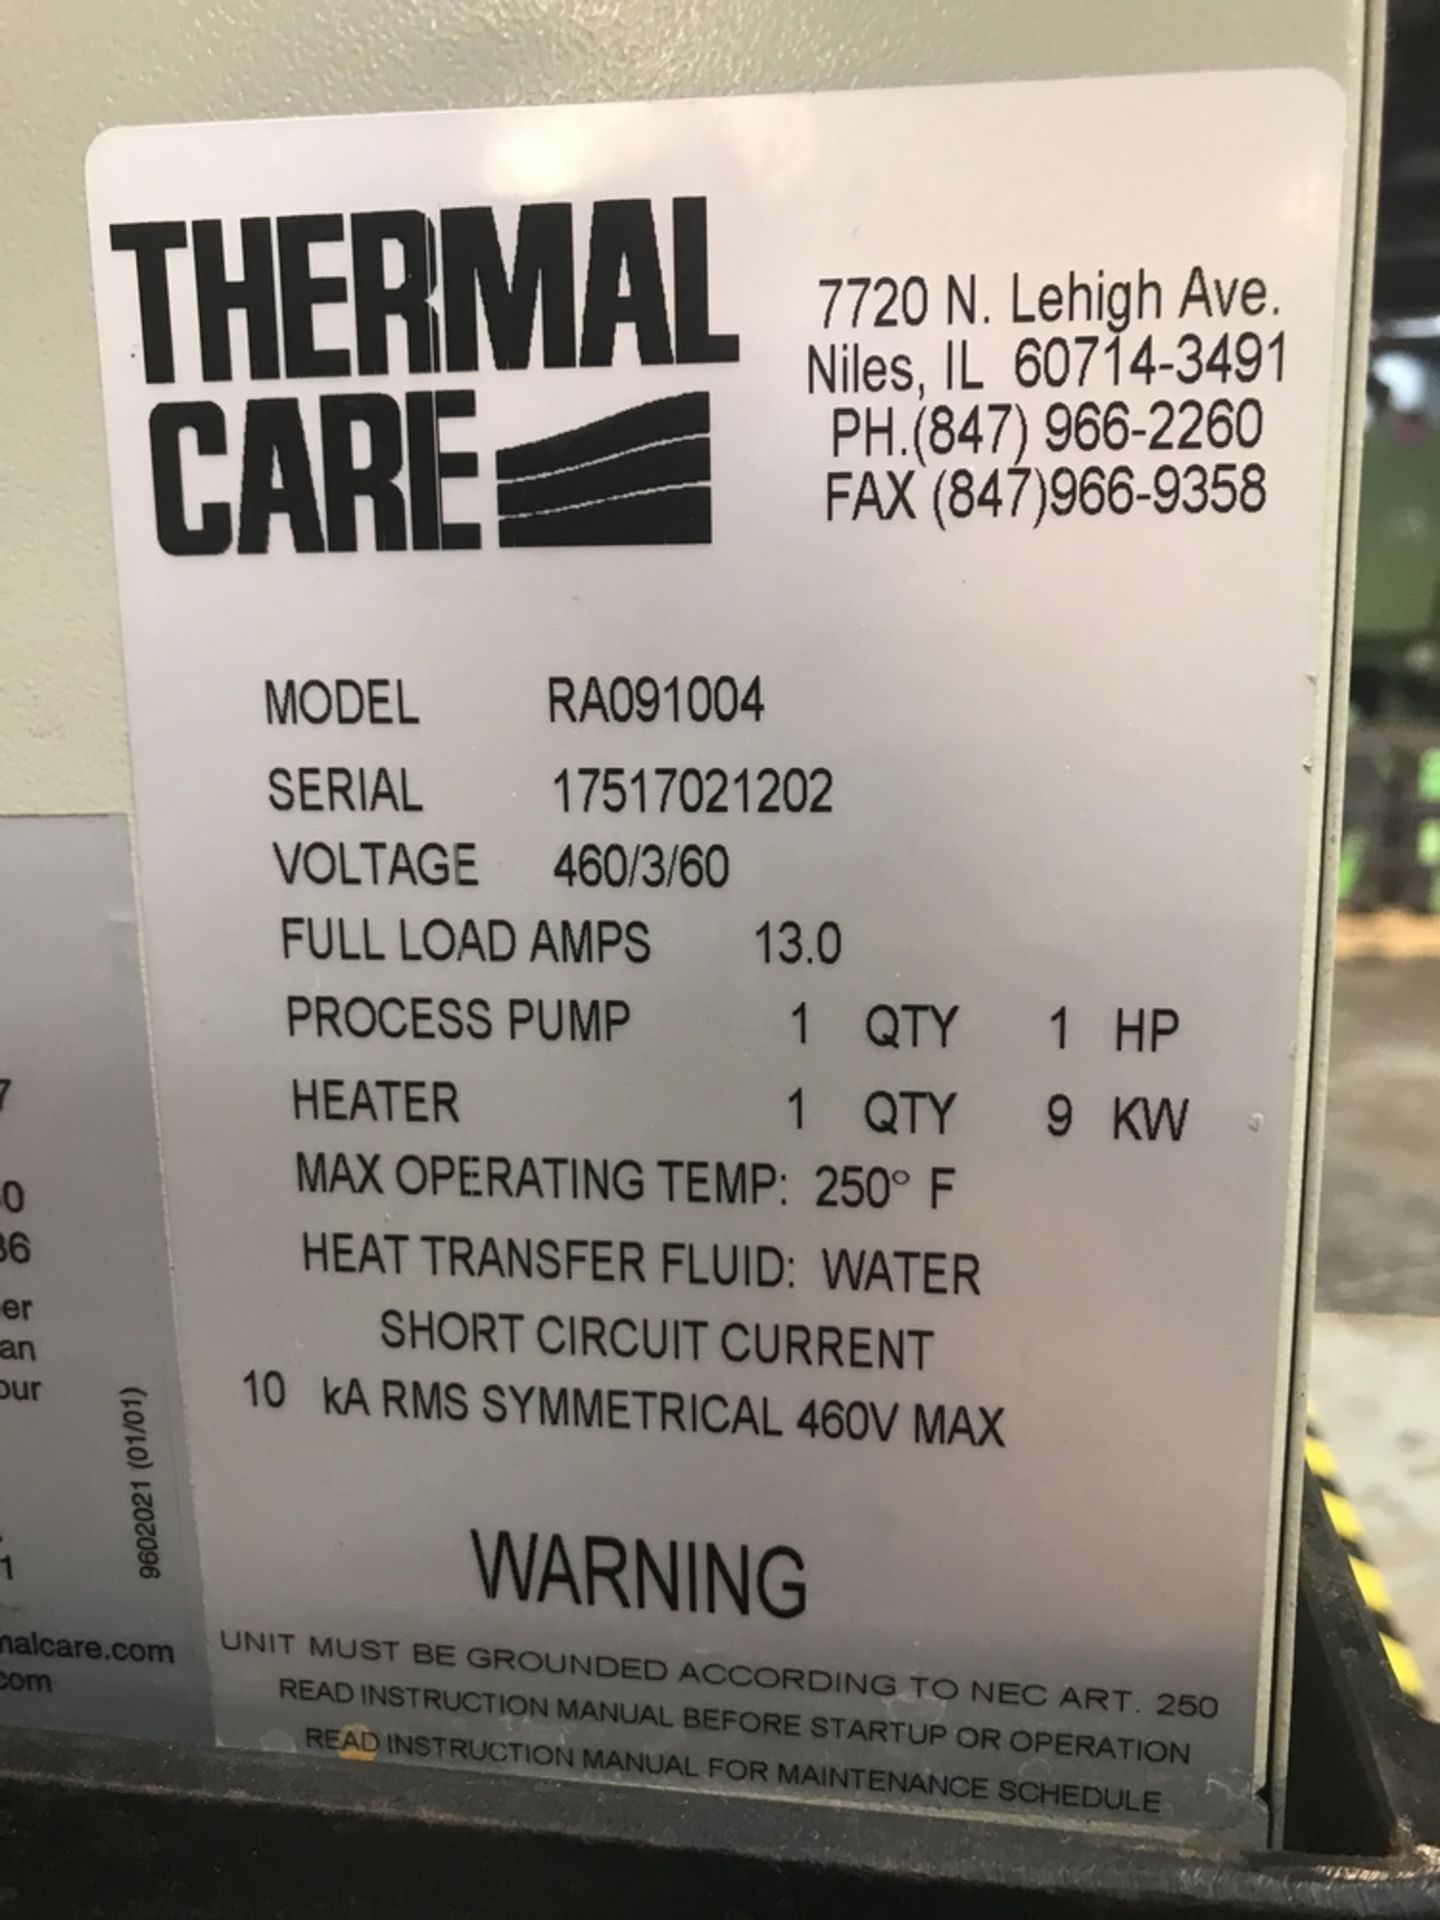 THERMAL CARE AQUATHERM RA091004 Thermolator, s/n 17517021202 BLDG #1 - Image 2 of 2